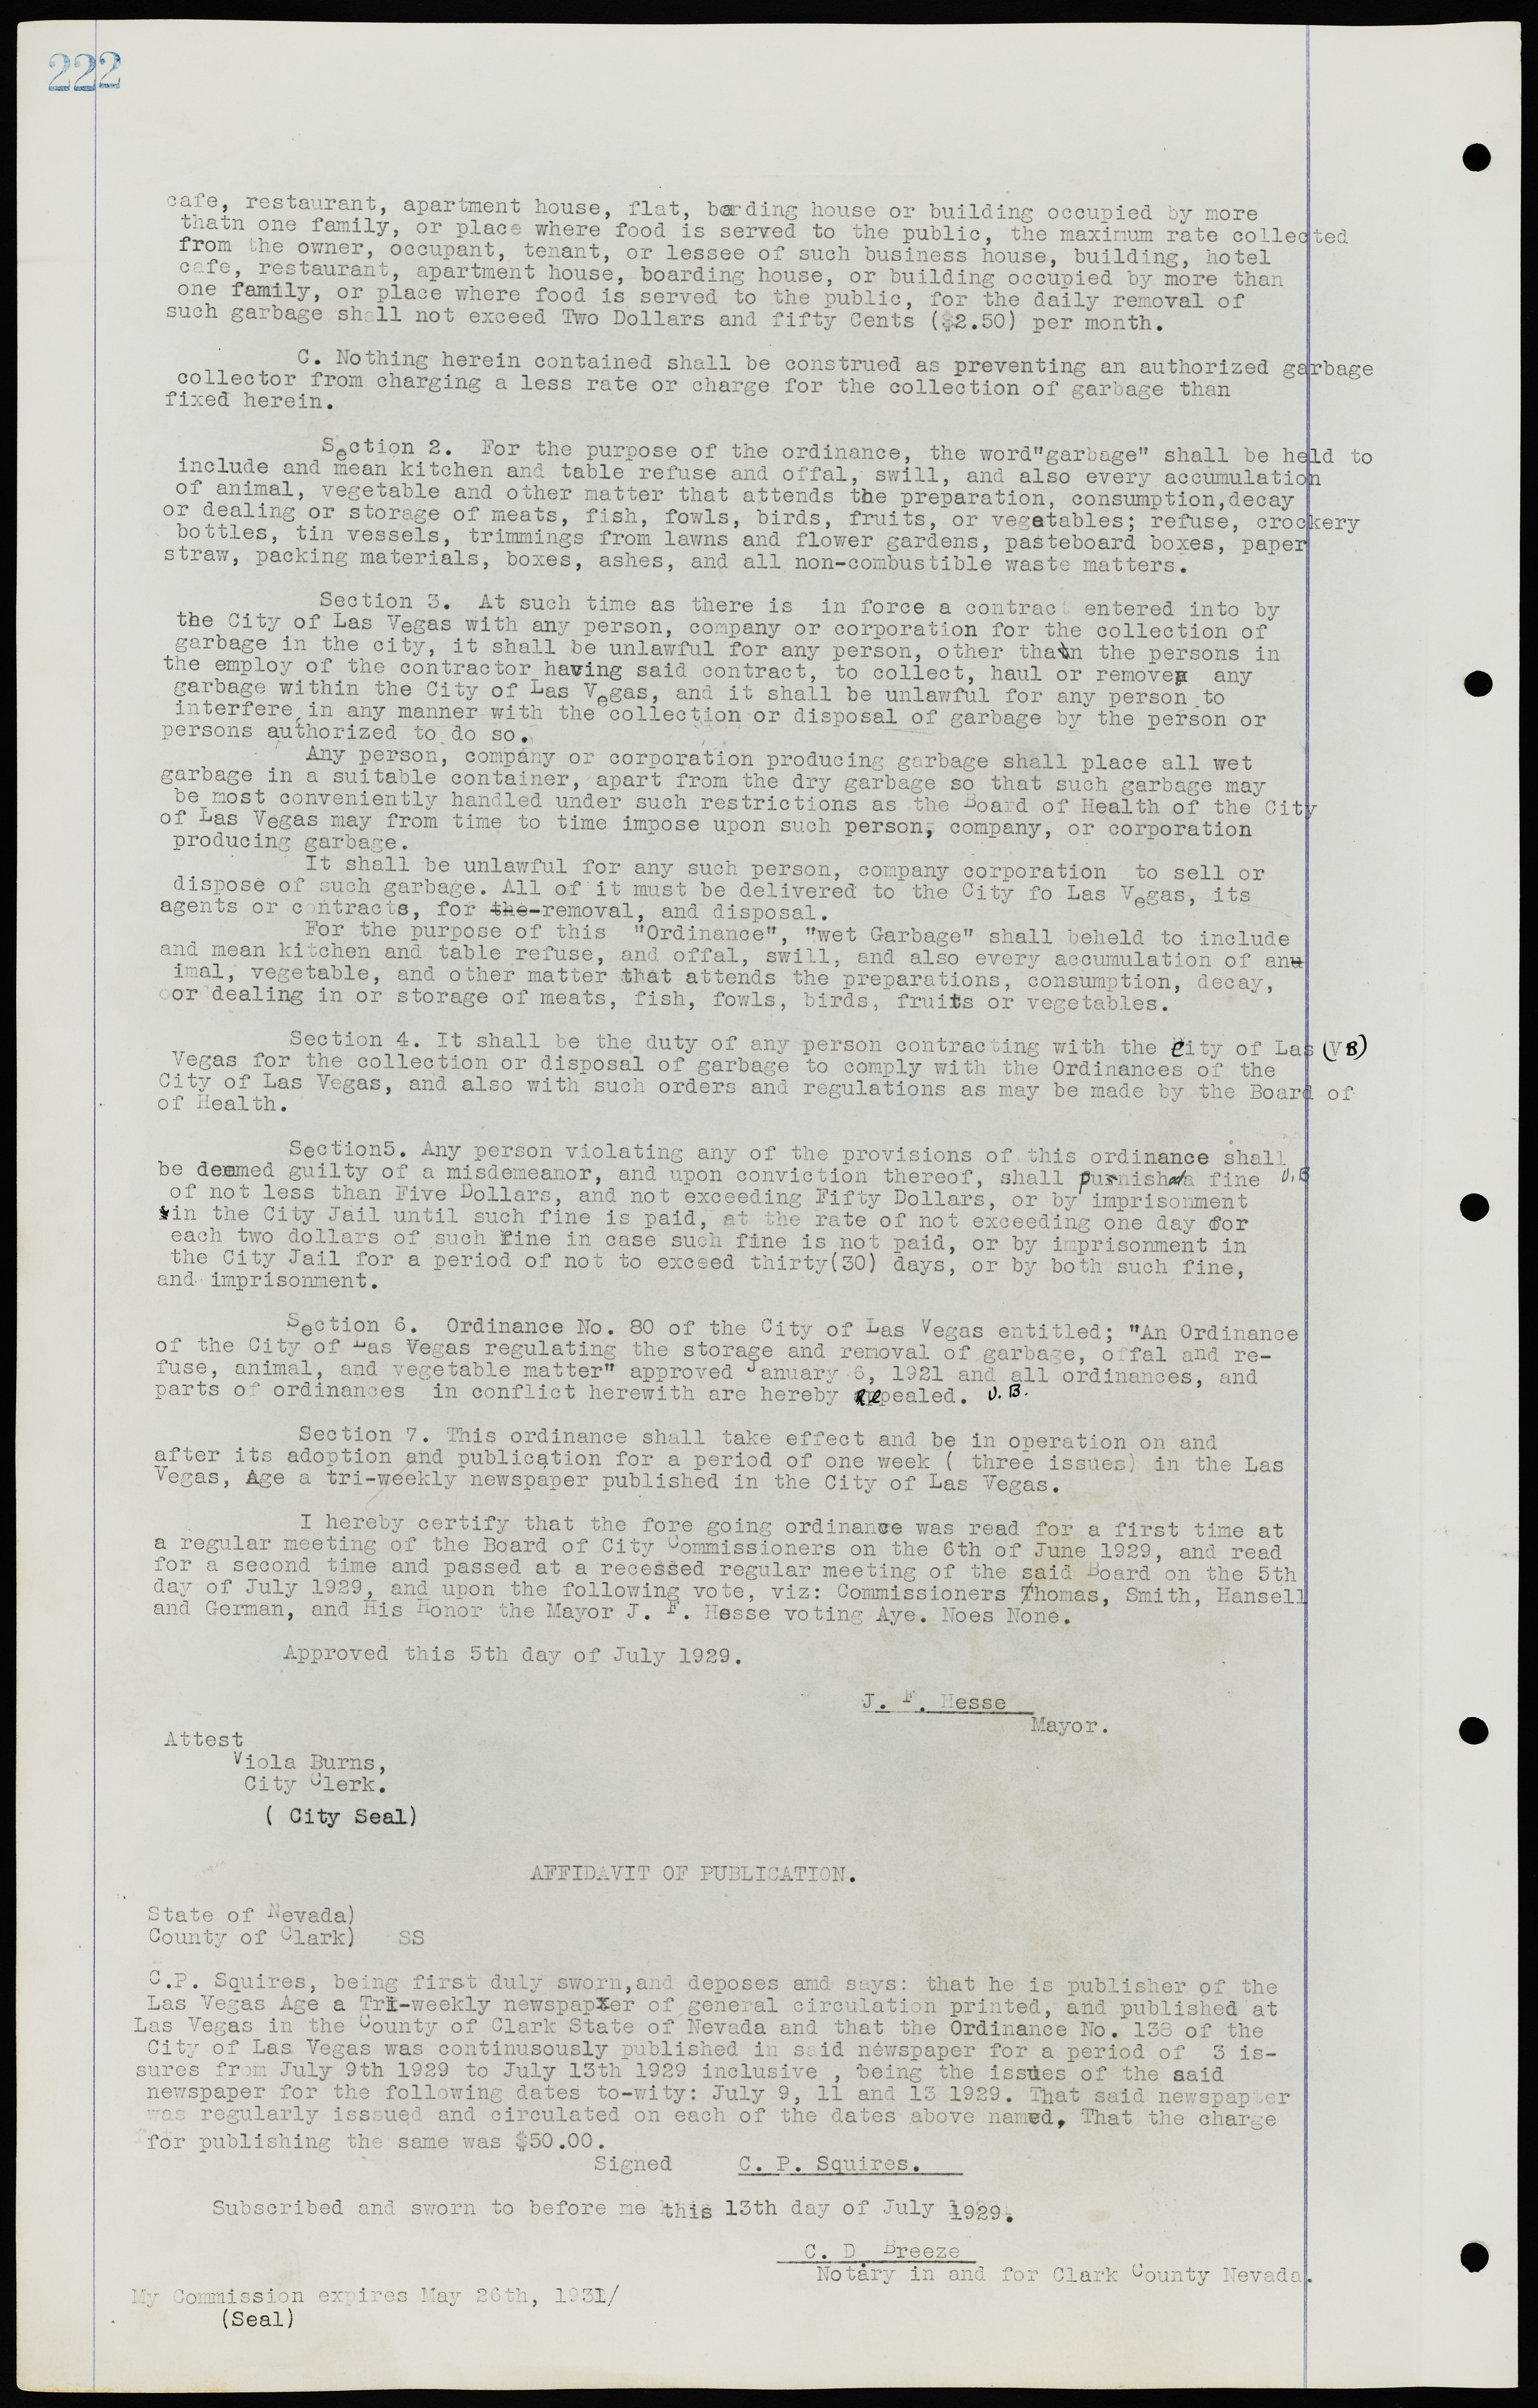 Las Vegas City Ordinances, July 18, 1911 to March 31, 1933, lvc000013-226